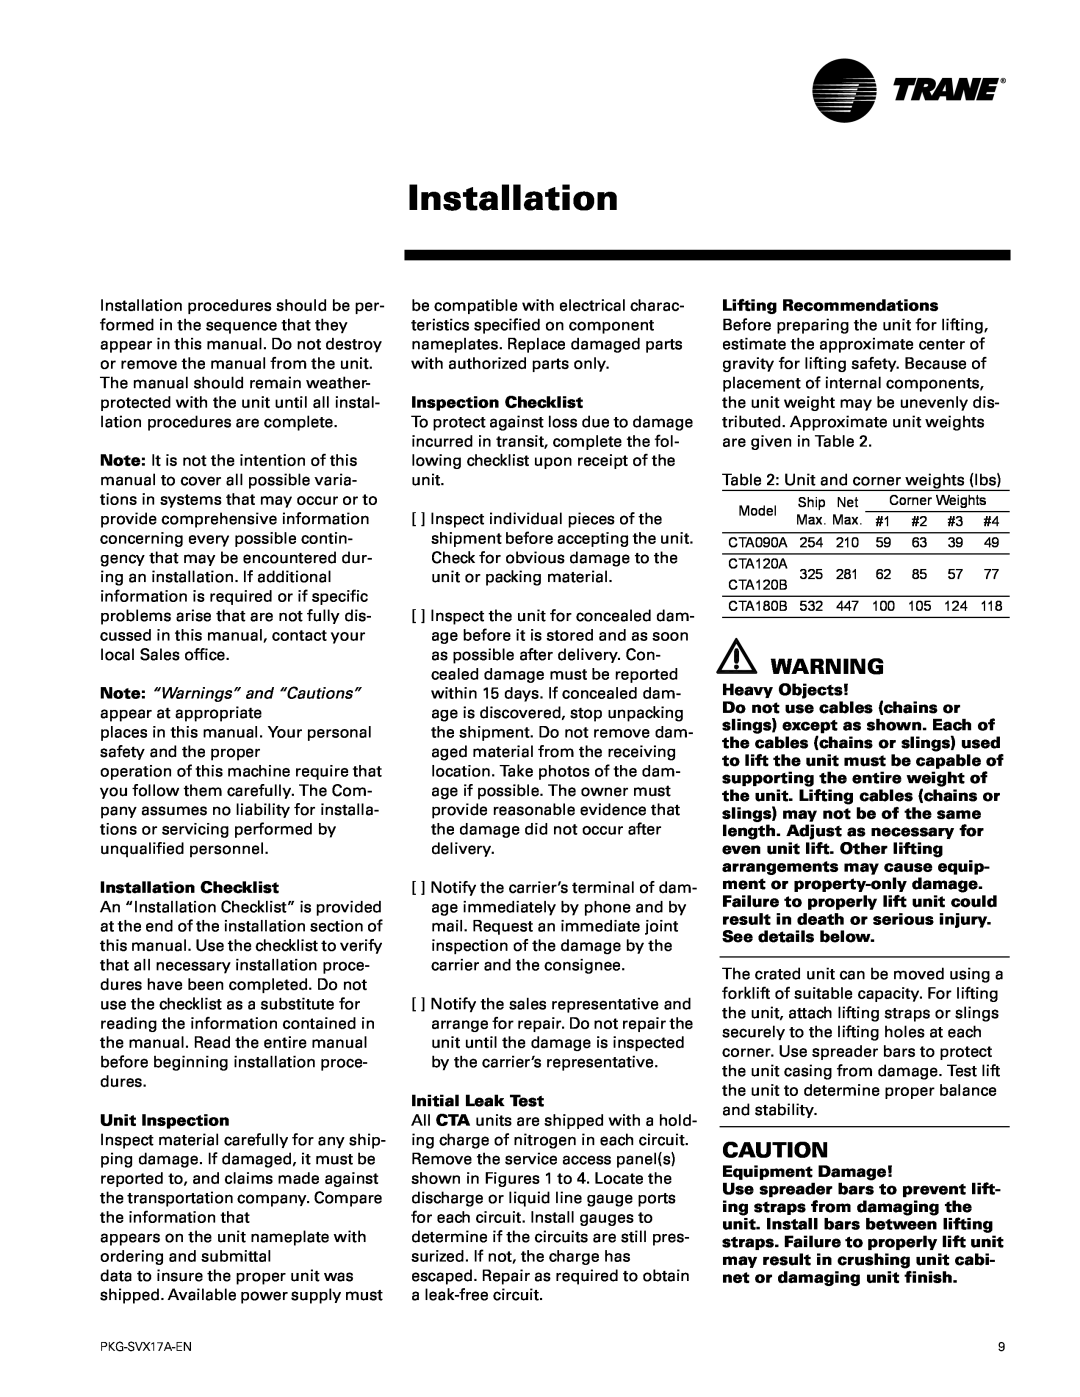 Trane PKG-SVX17A-EN Installation Checklist, Unit Inspection, Inspection Checklist, Initial Leak Test, Heavy Objects 